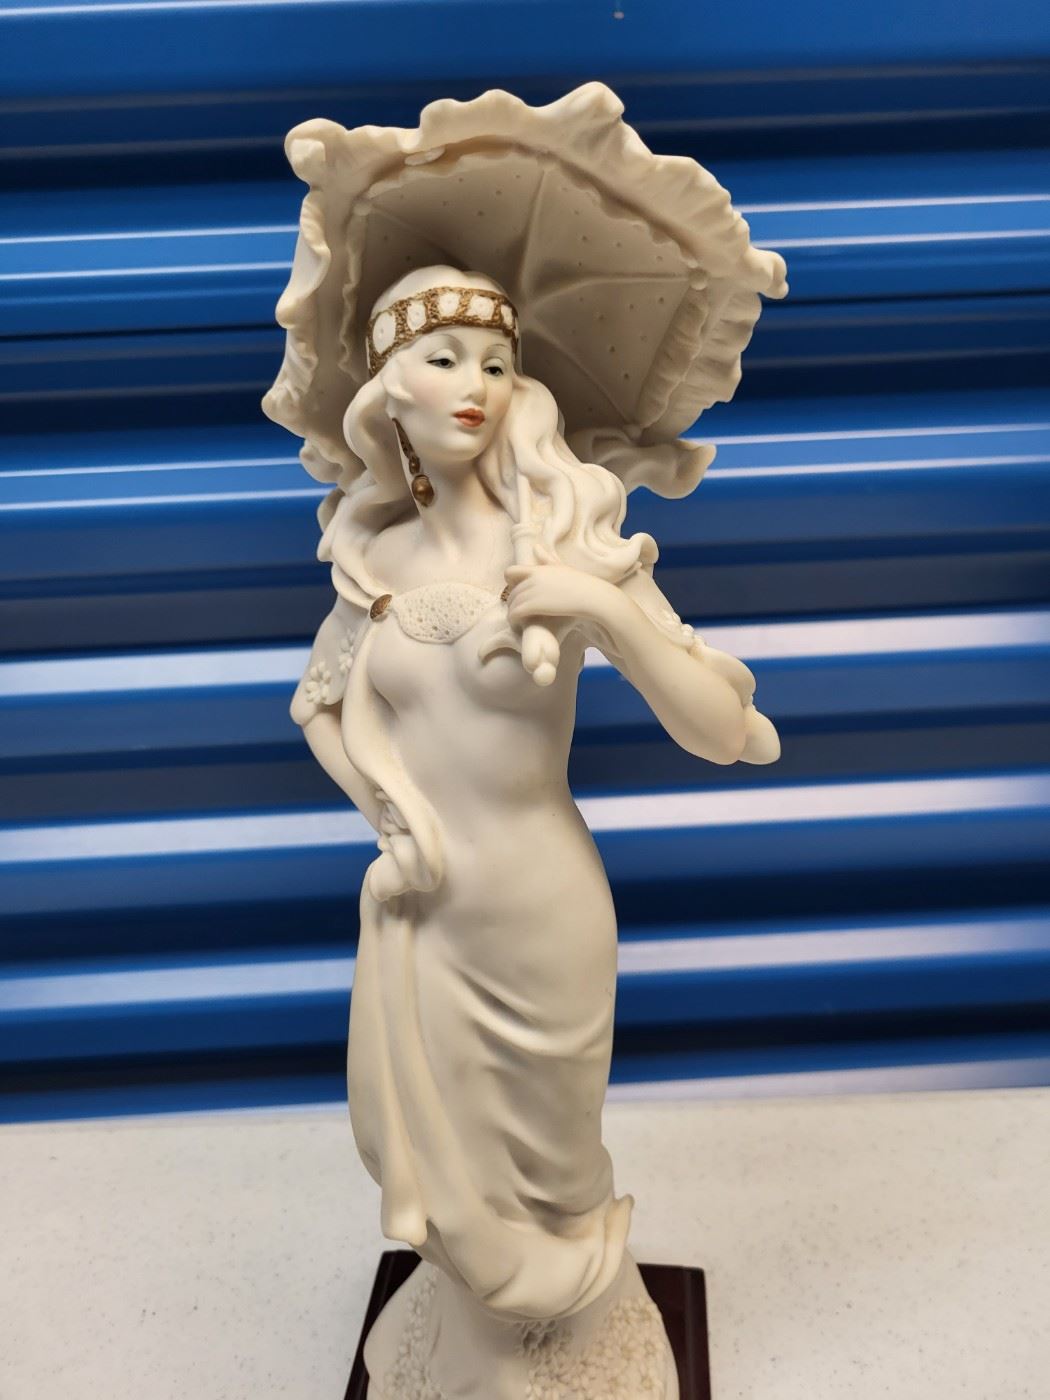 #1 - $50.00 Barnegat - Giuseppe Armani sculpture "Woman with Umbrella"